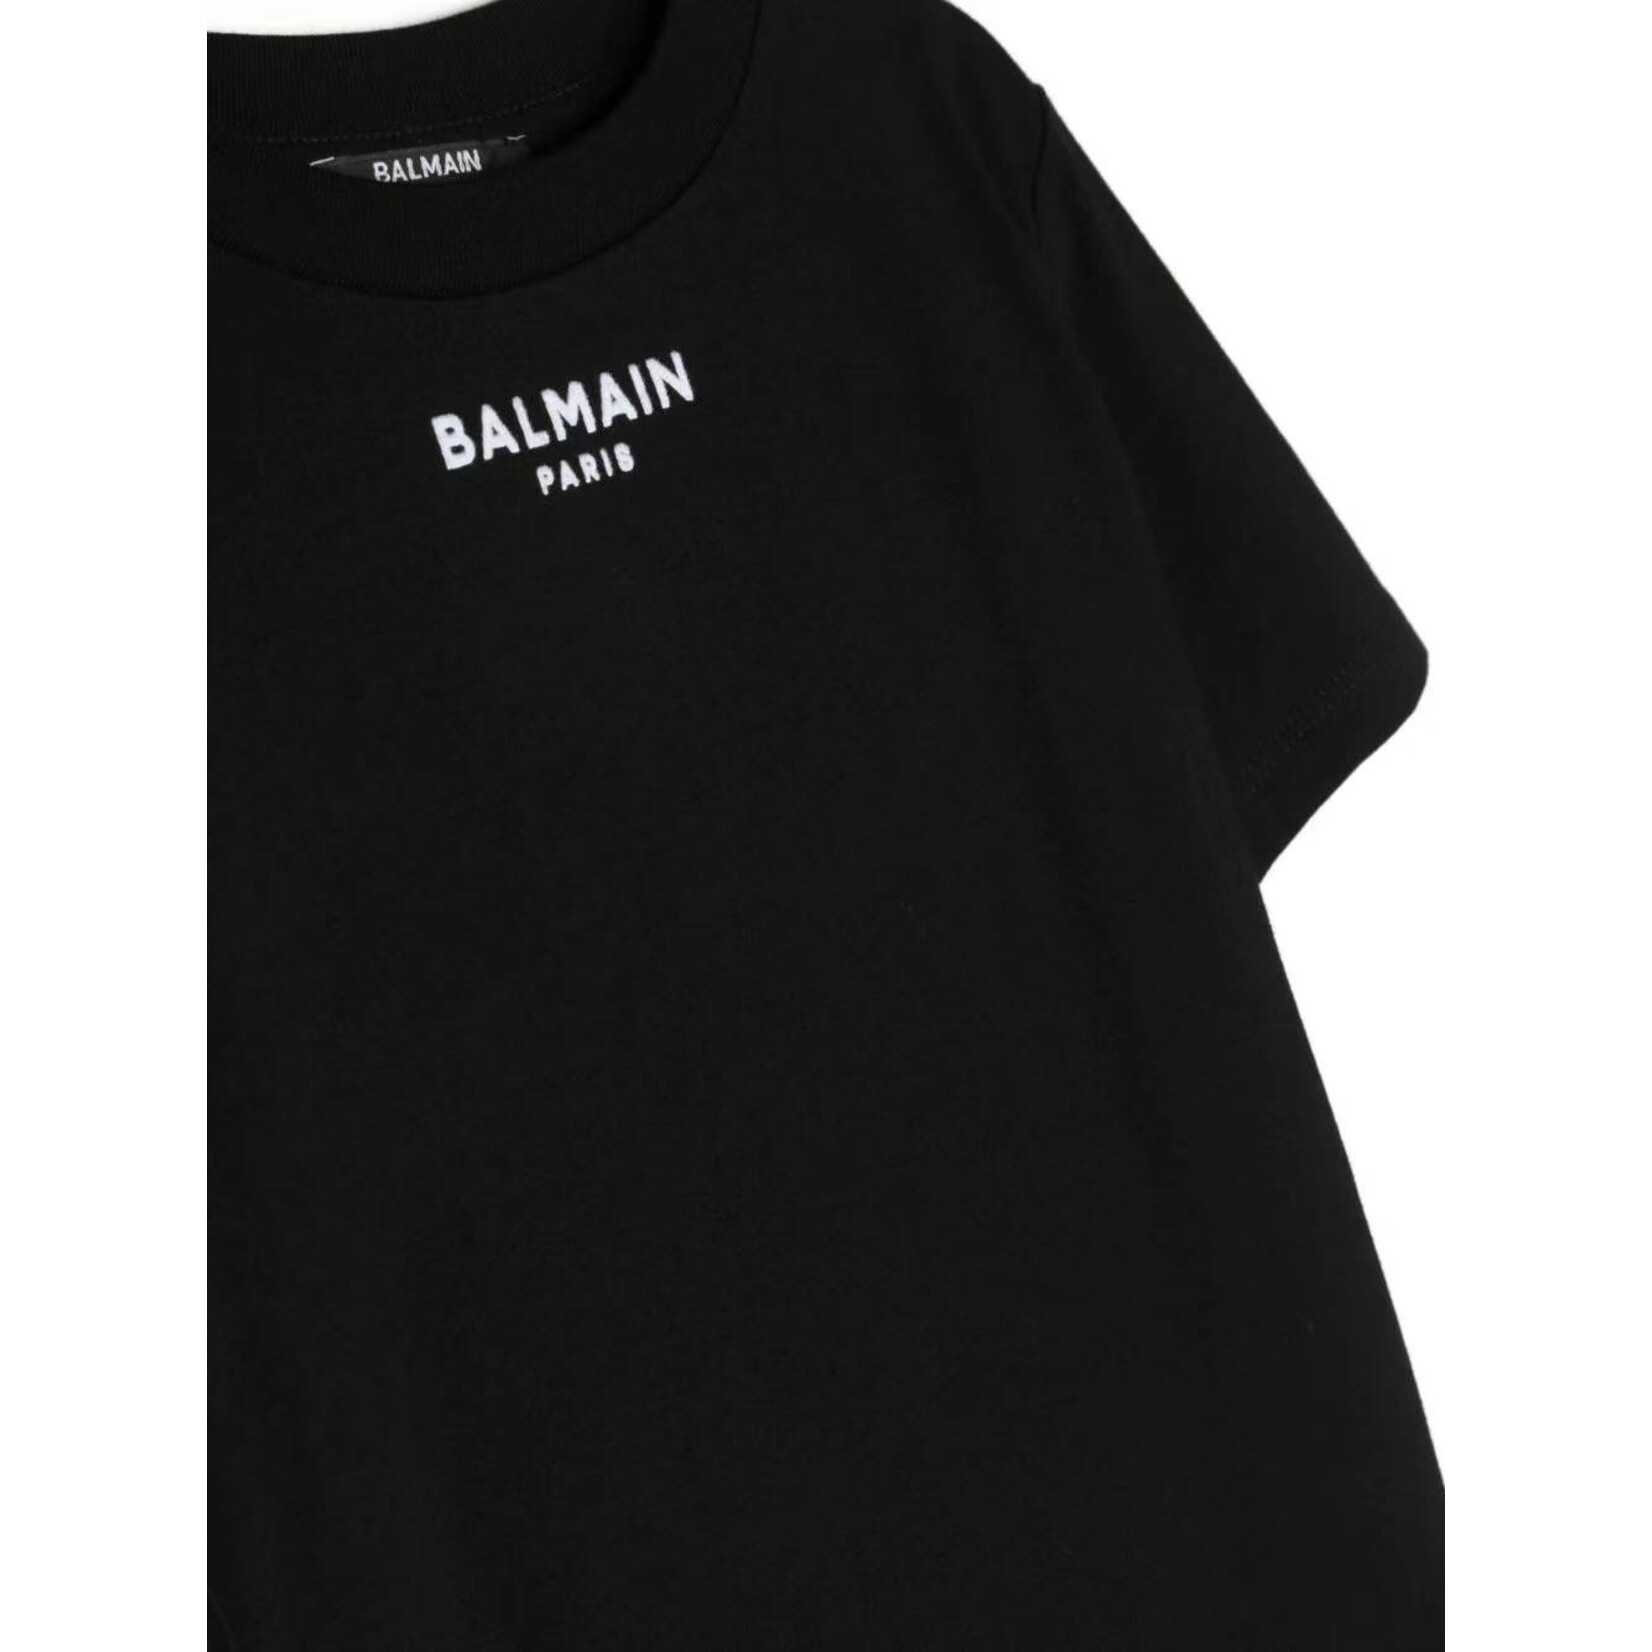 Balmain Balmain Embroidery Logo Kids T-Shirt